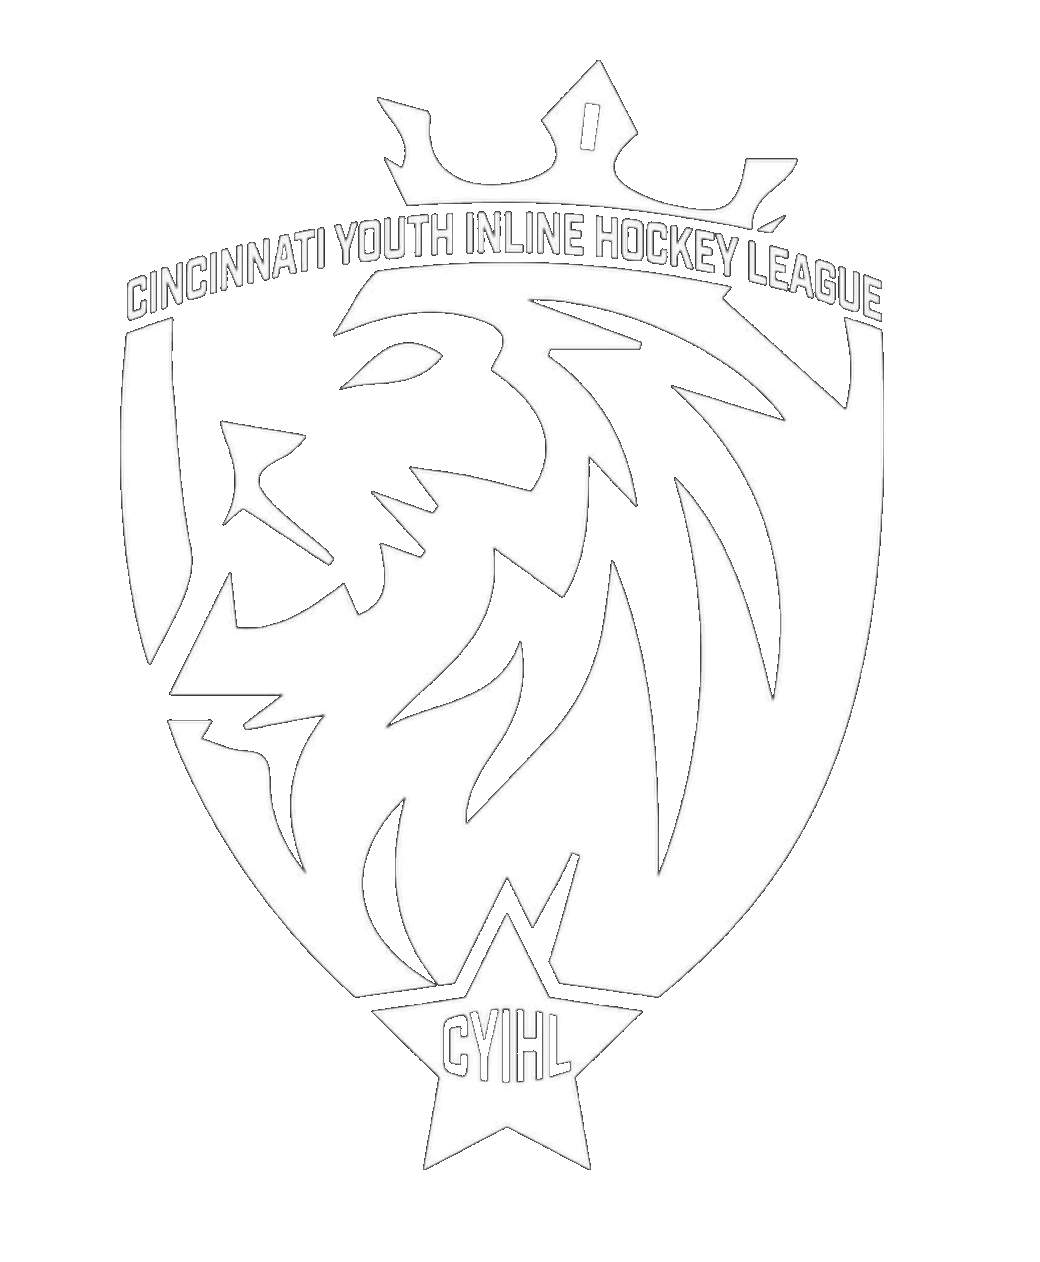 Cincinnati Youth Inline Hockey League